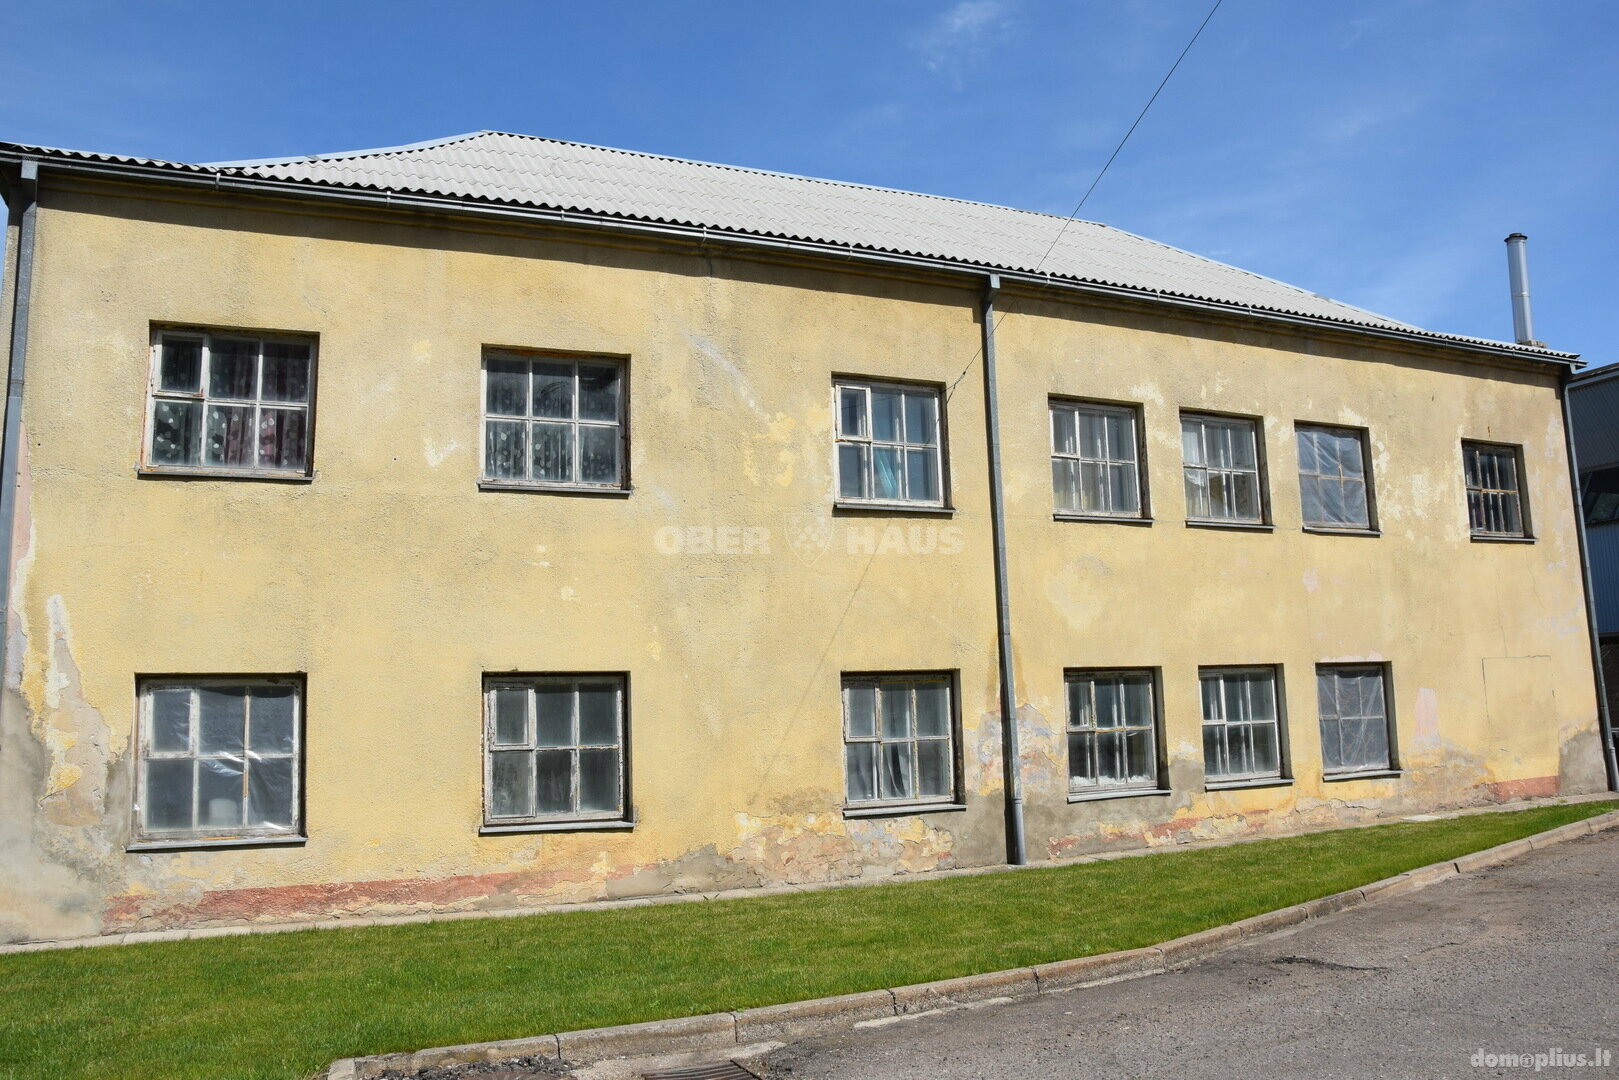 For sale Manufacture and storage premises Šiauliuose, Centre